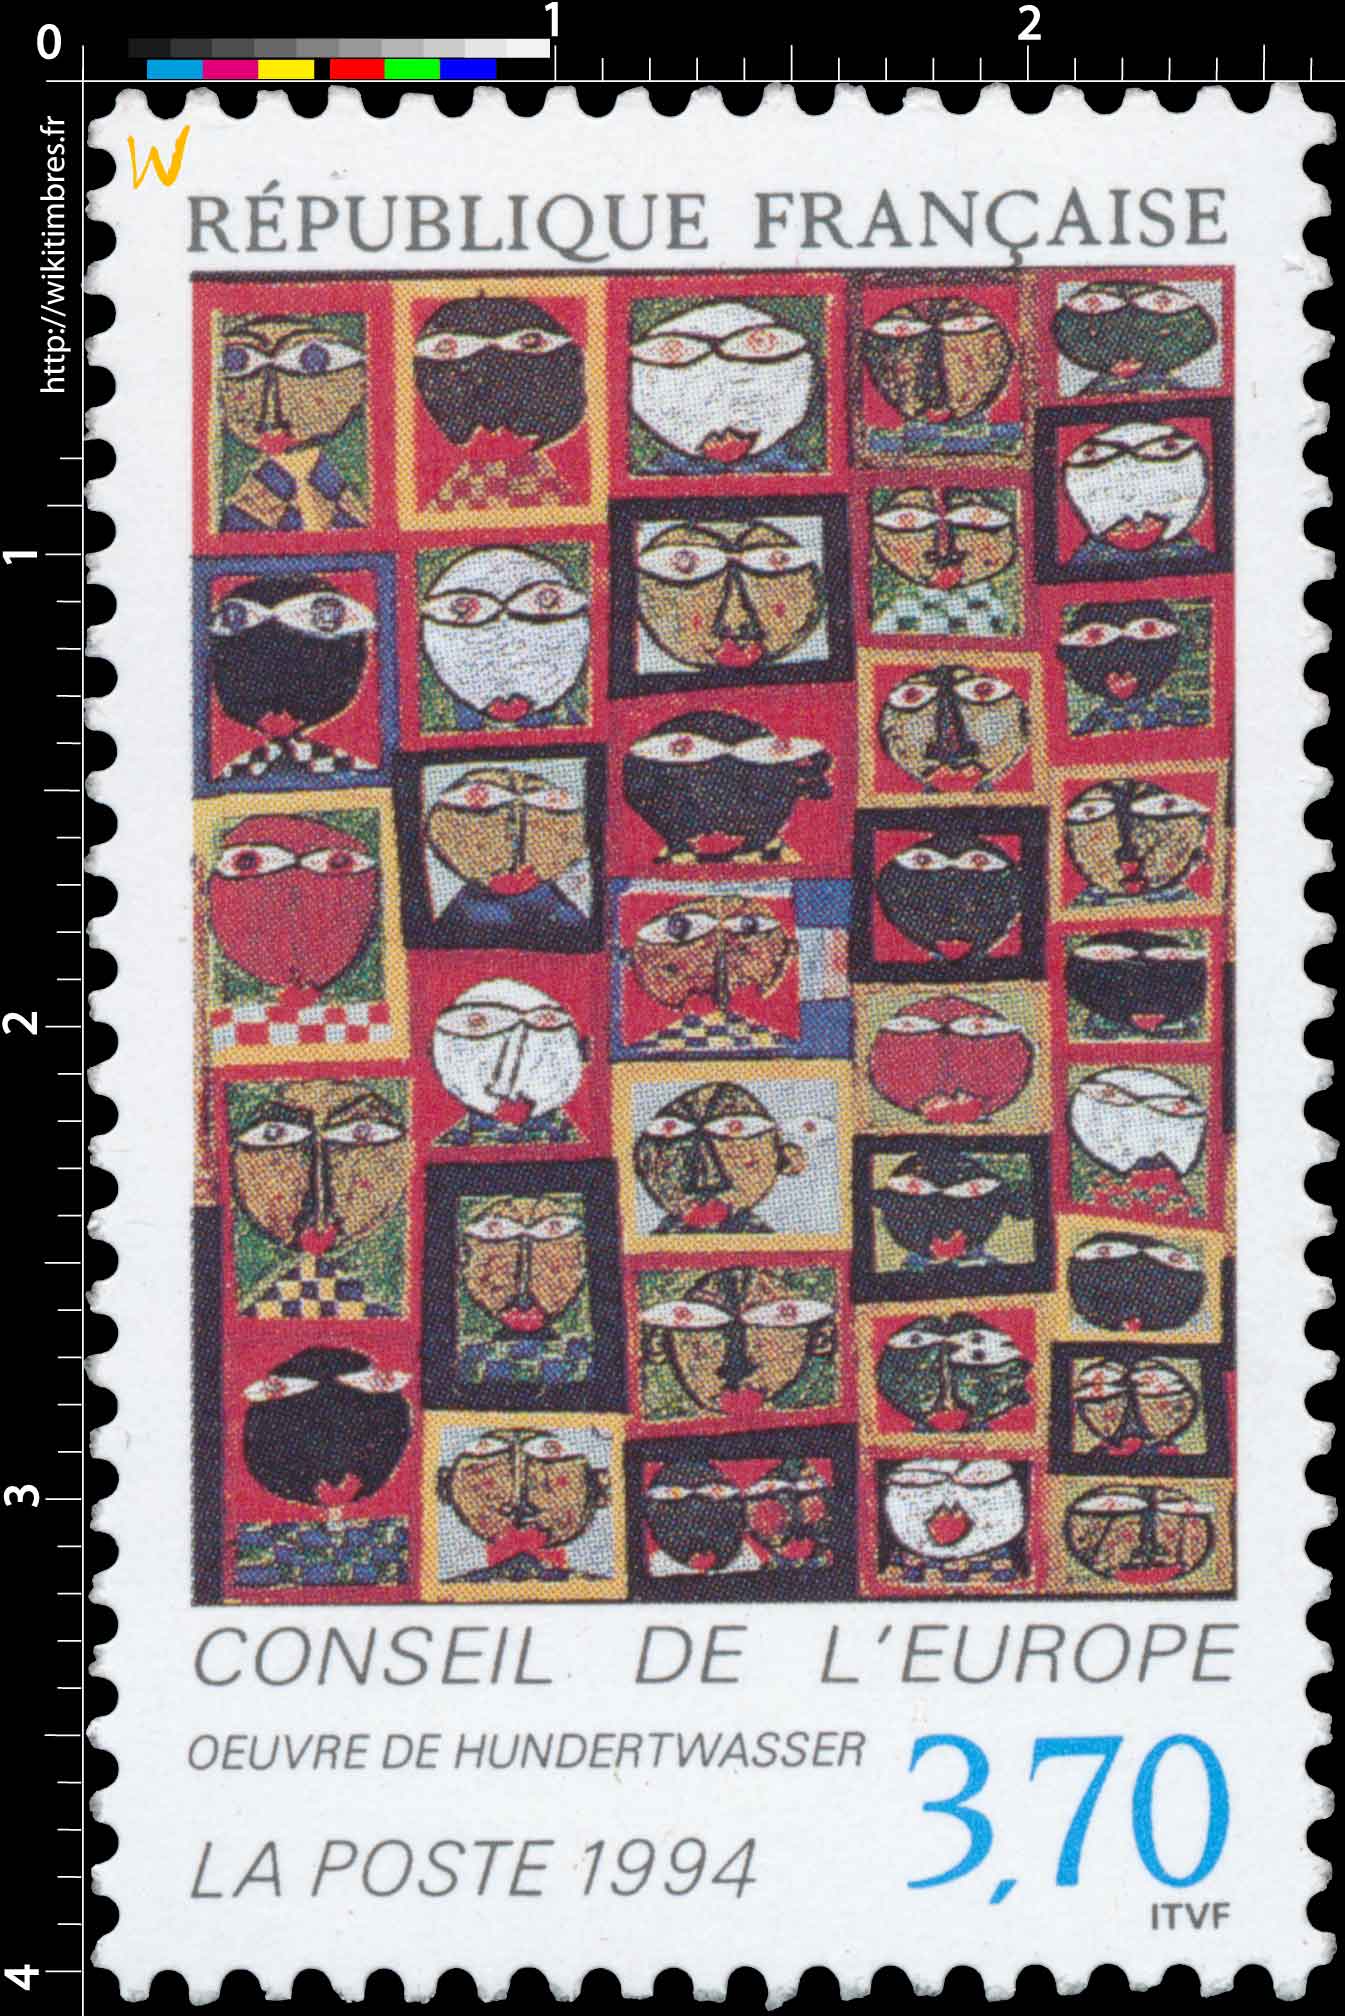 1994 CONSEIL DE L'EUROPE ŒUVRE DE HUNDERTWASSER